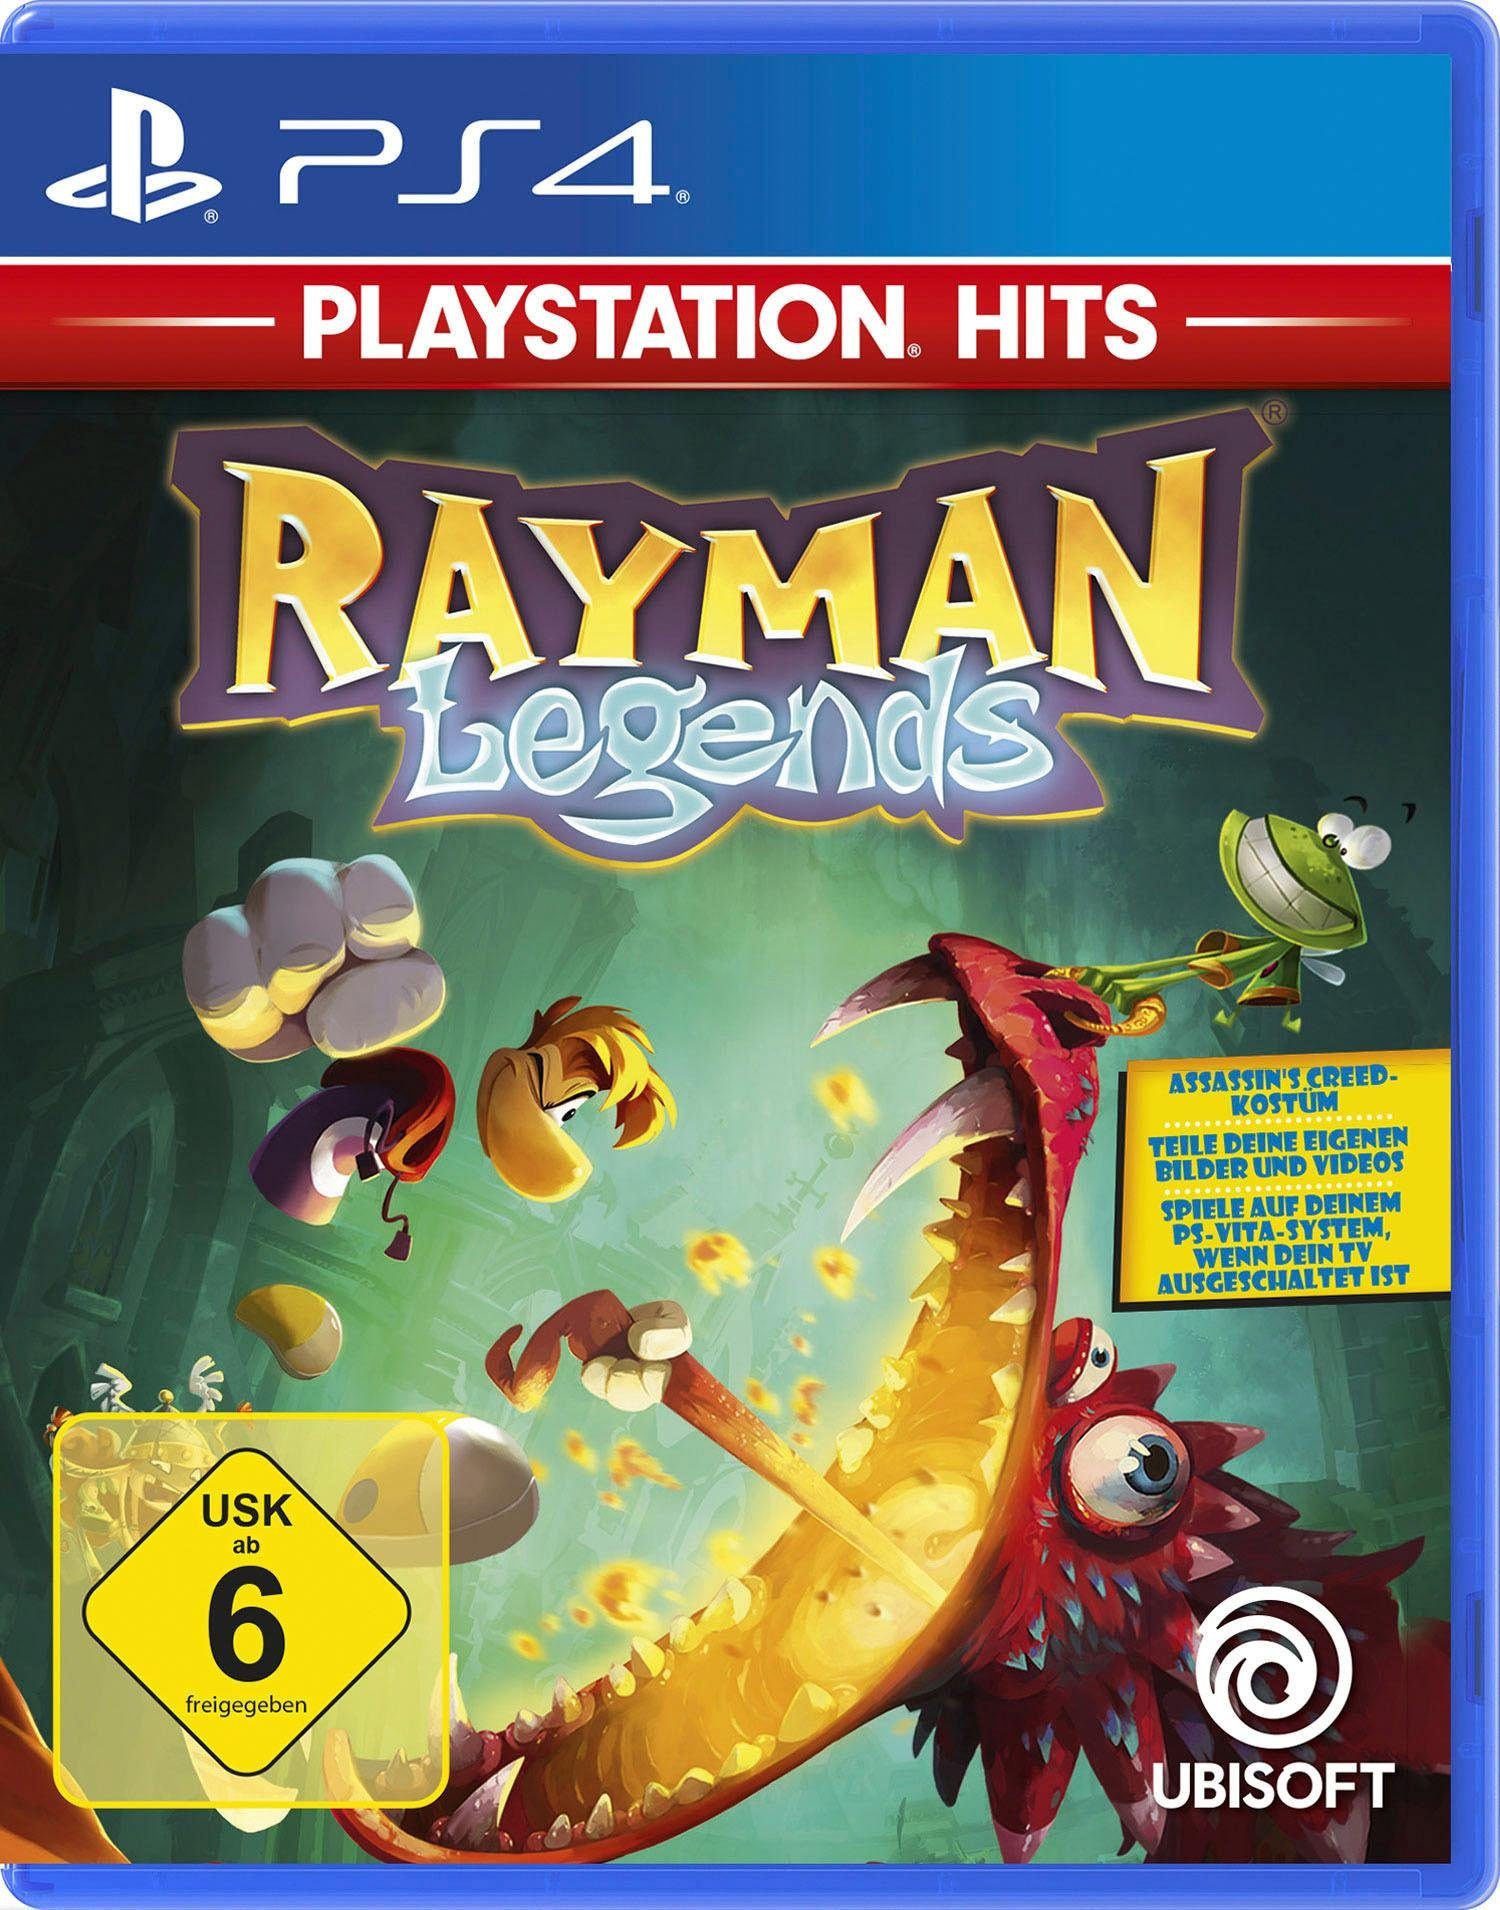 UBISOFT 4, Software Legends Pyramide PlayStation Rayman